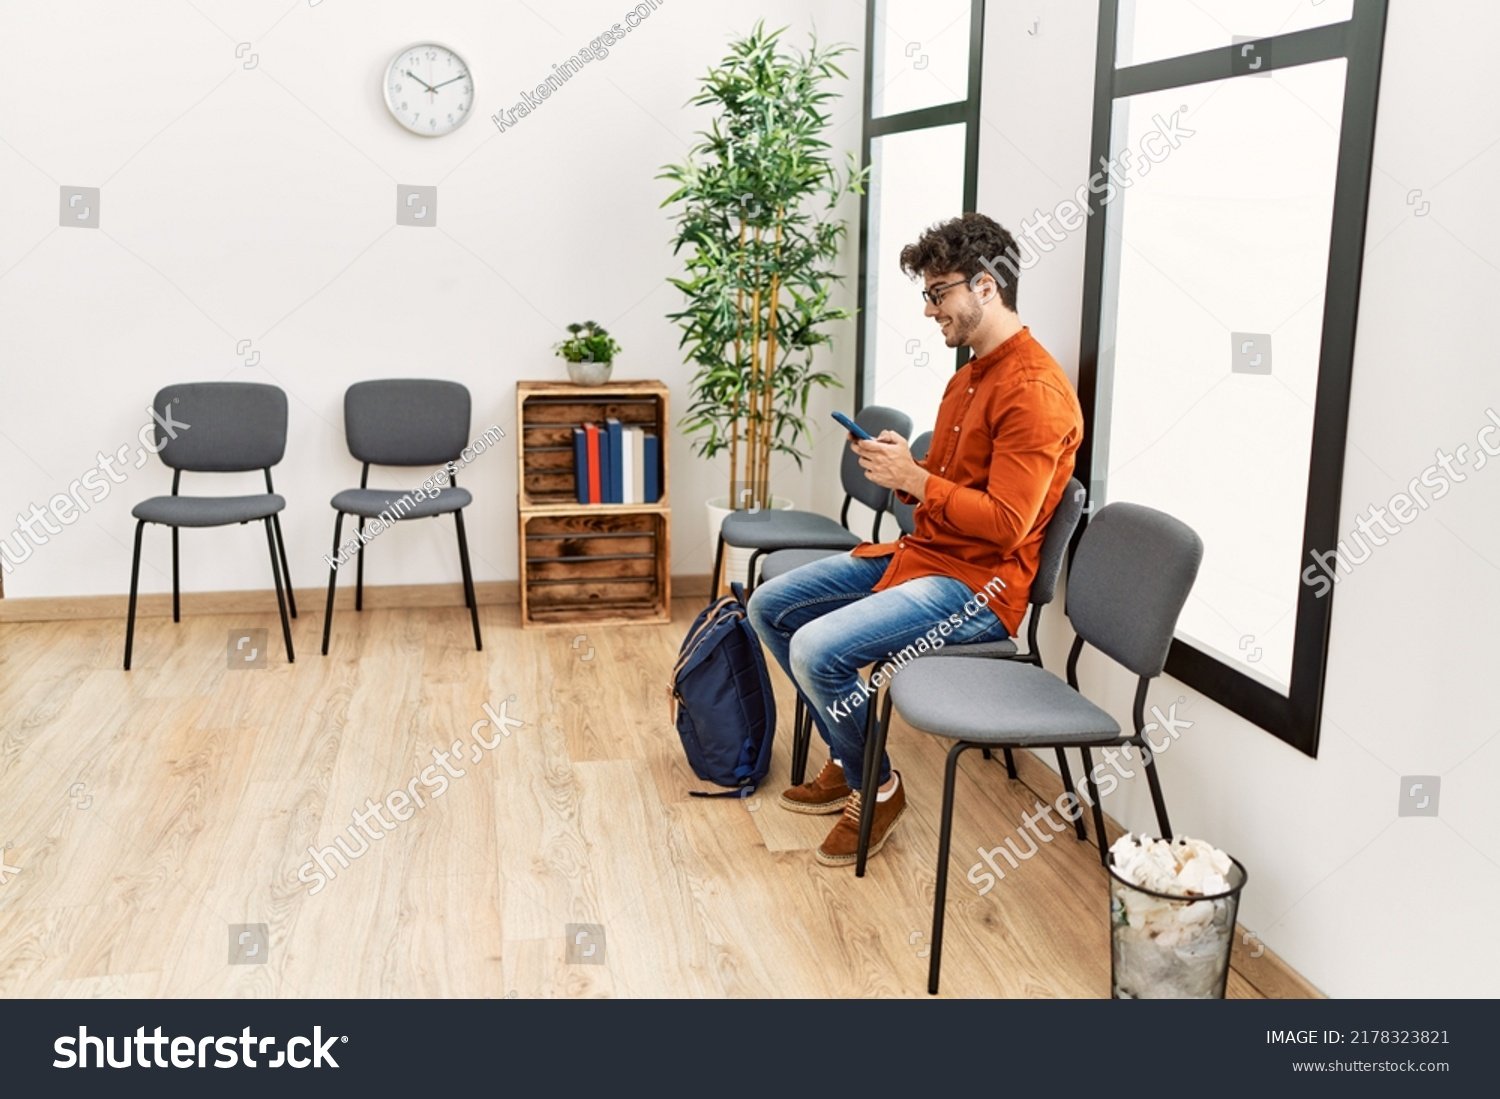 personas relajandose en lujosa sala de espera